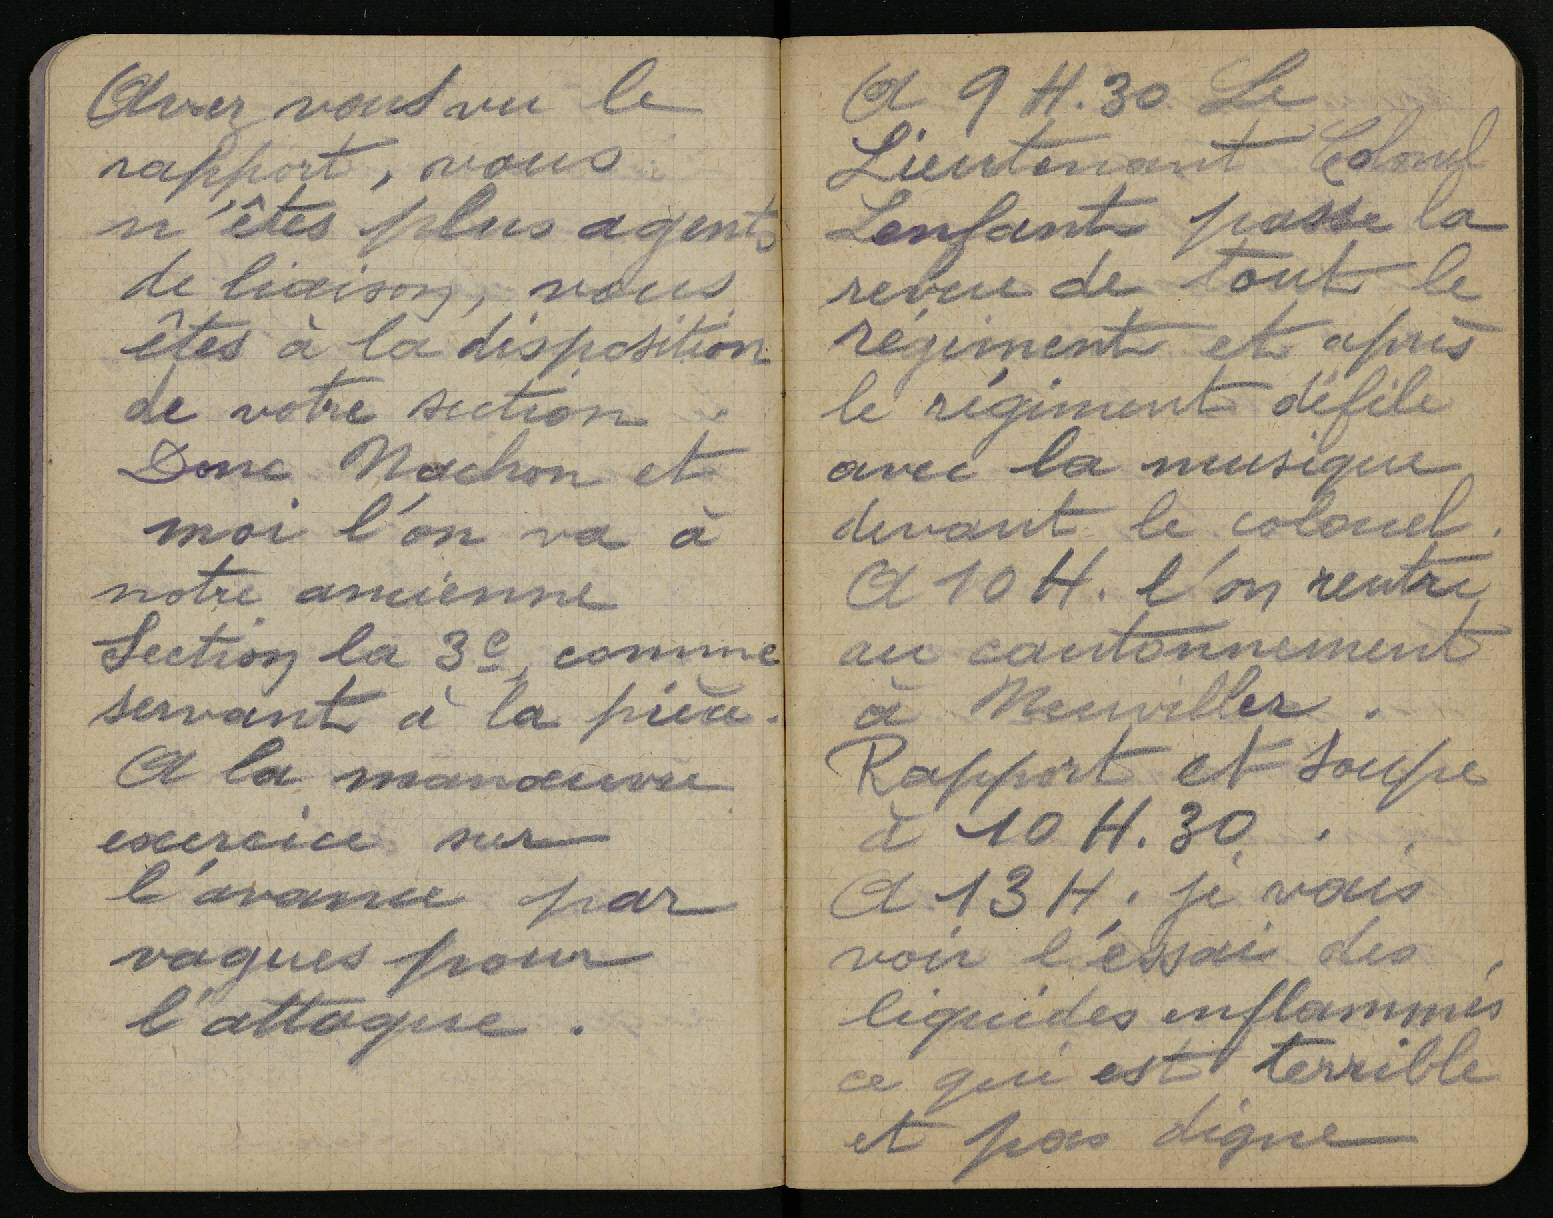 Carnet de Louis Boyer, 1er octobre 1916 - HCL/HD/1z/1/3